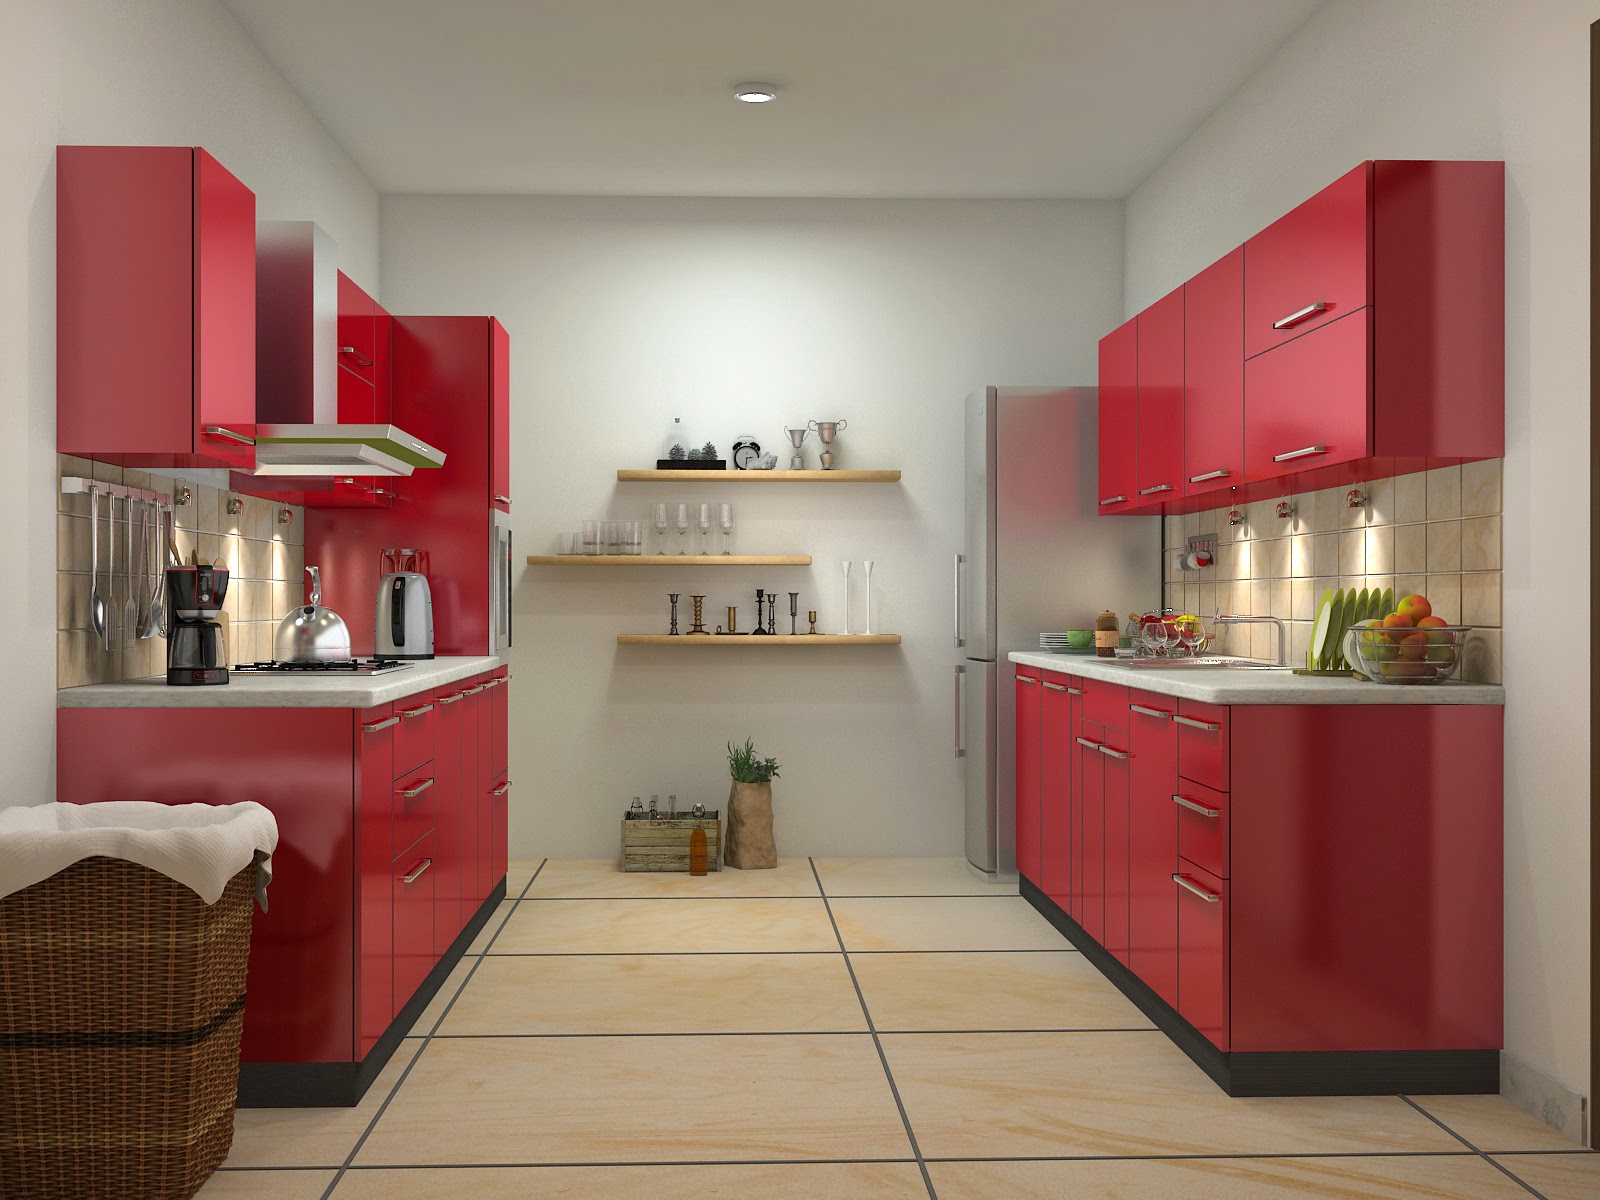 Modular Kitchen inspiration | Interior Decor Blog ...